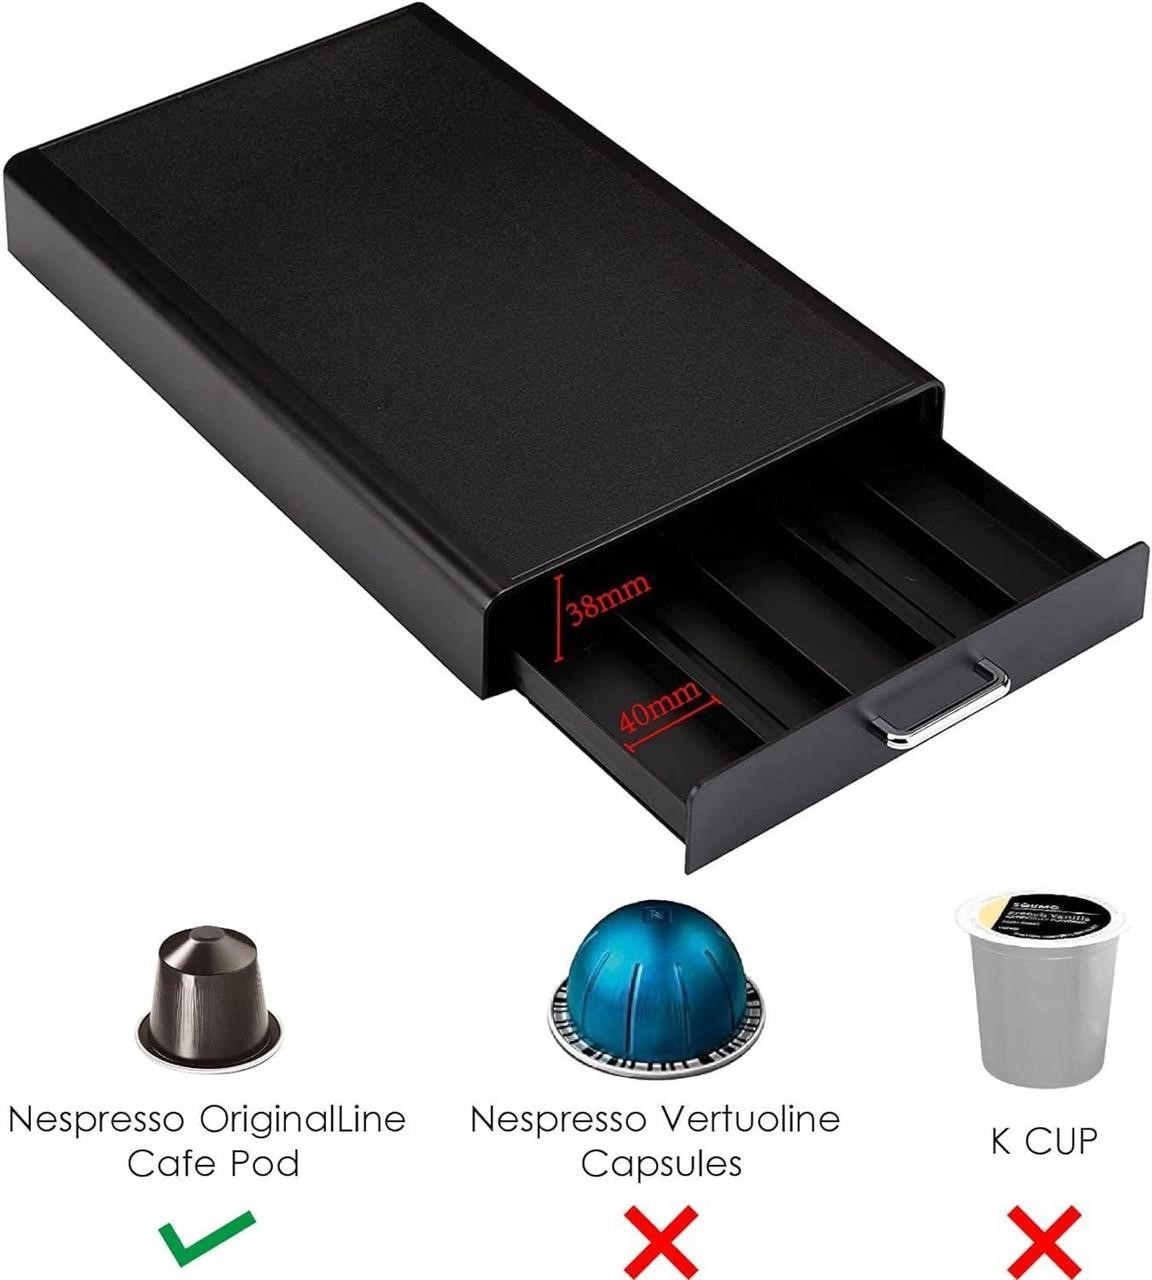 Nespresso Coffee Pod Drawer - Holds 50 Capsules